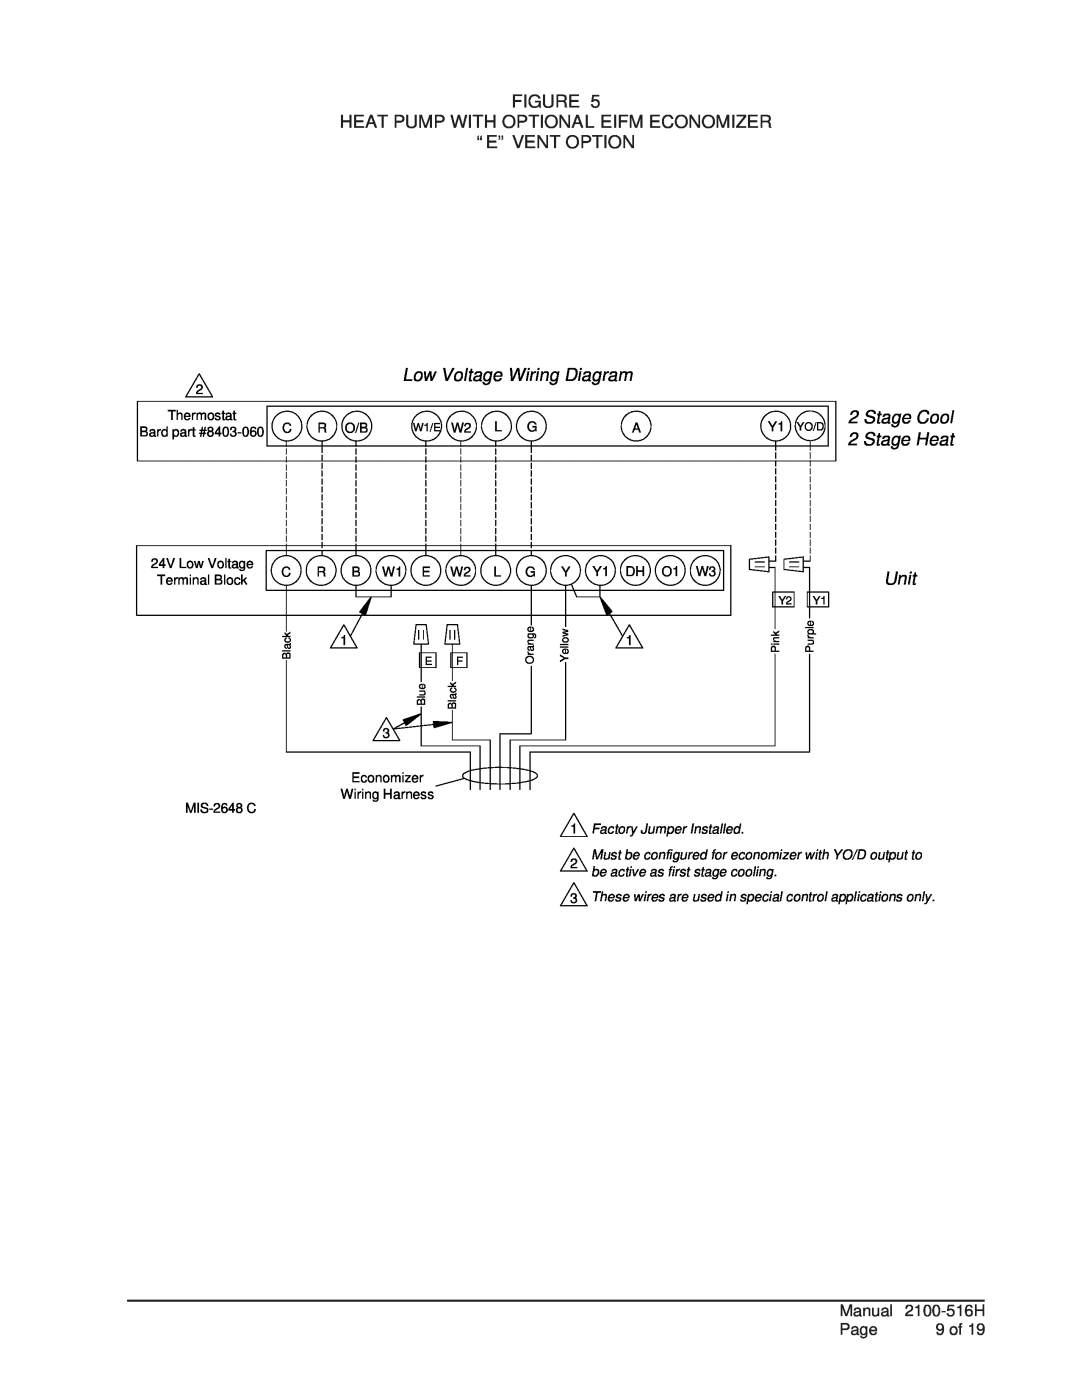 Bard T**H, W**H Unit, Low Voltage Wiring Diagram, Stage Cool, Stage Heat, Figure Heat Pump With Optional Eifm Economizer 